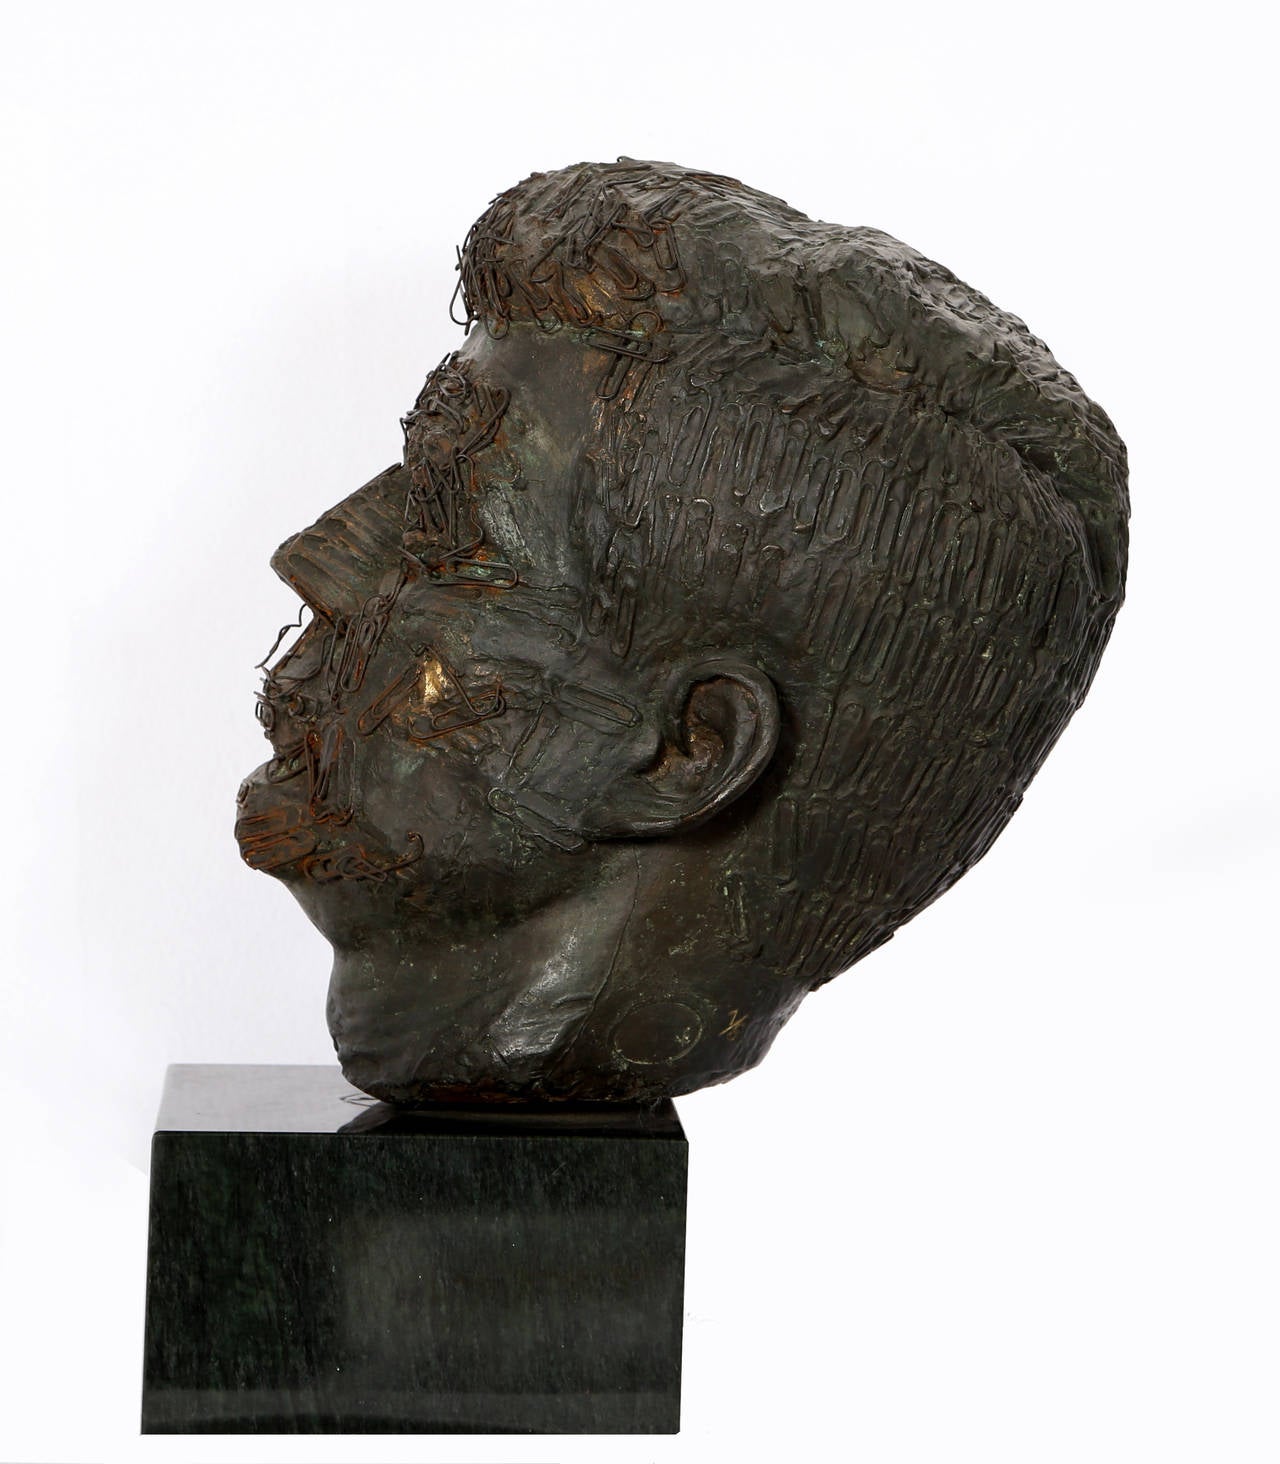 Bust of John F. Kennedy - Sculpture by Salvador Dalí